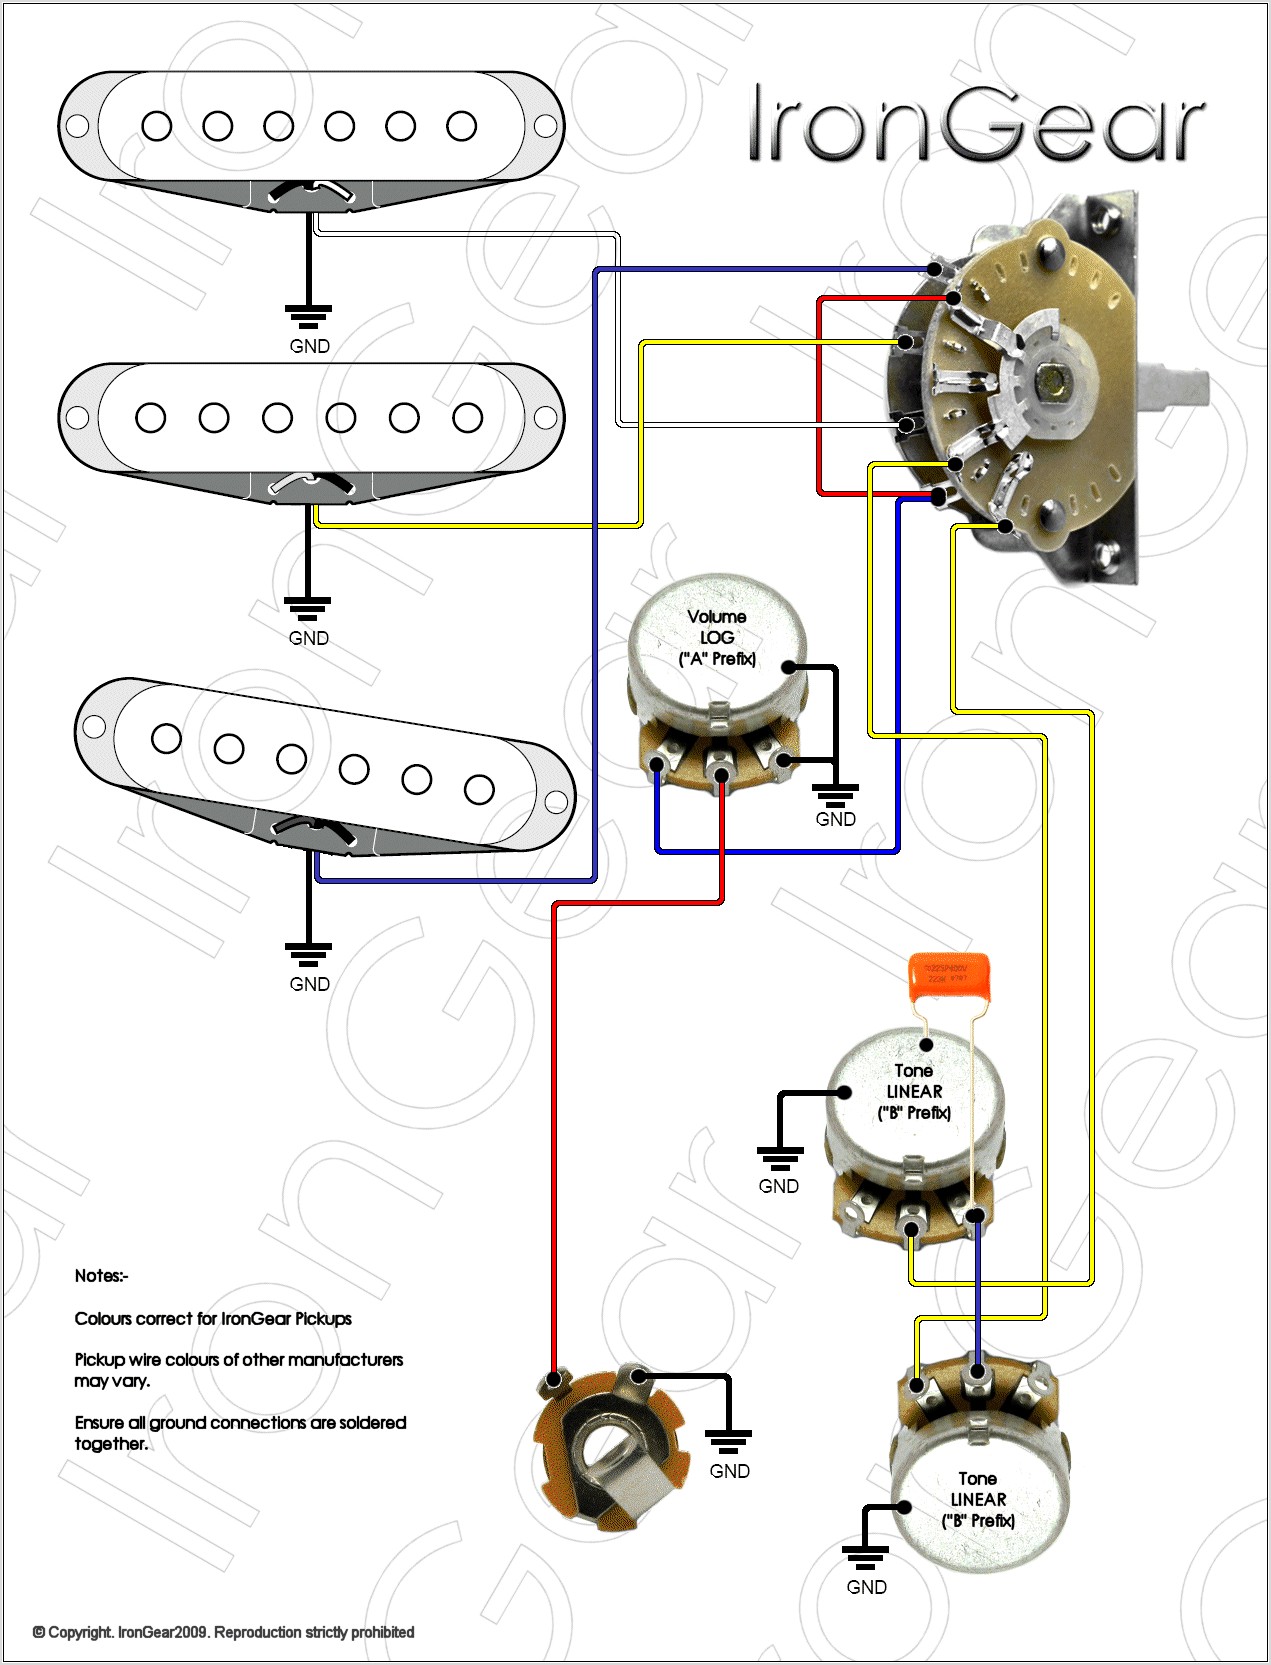 Strat Wiring Diagram 5 Way Switch